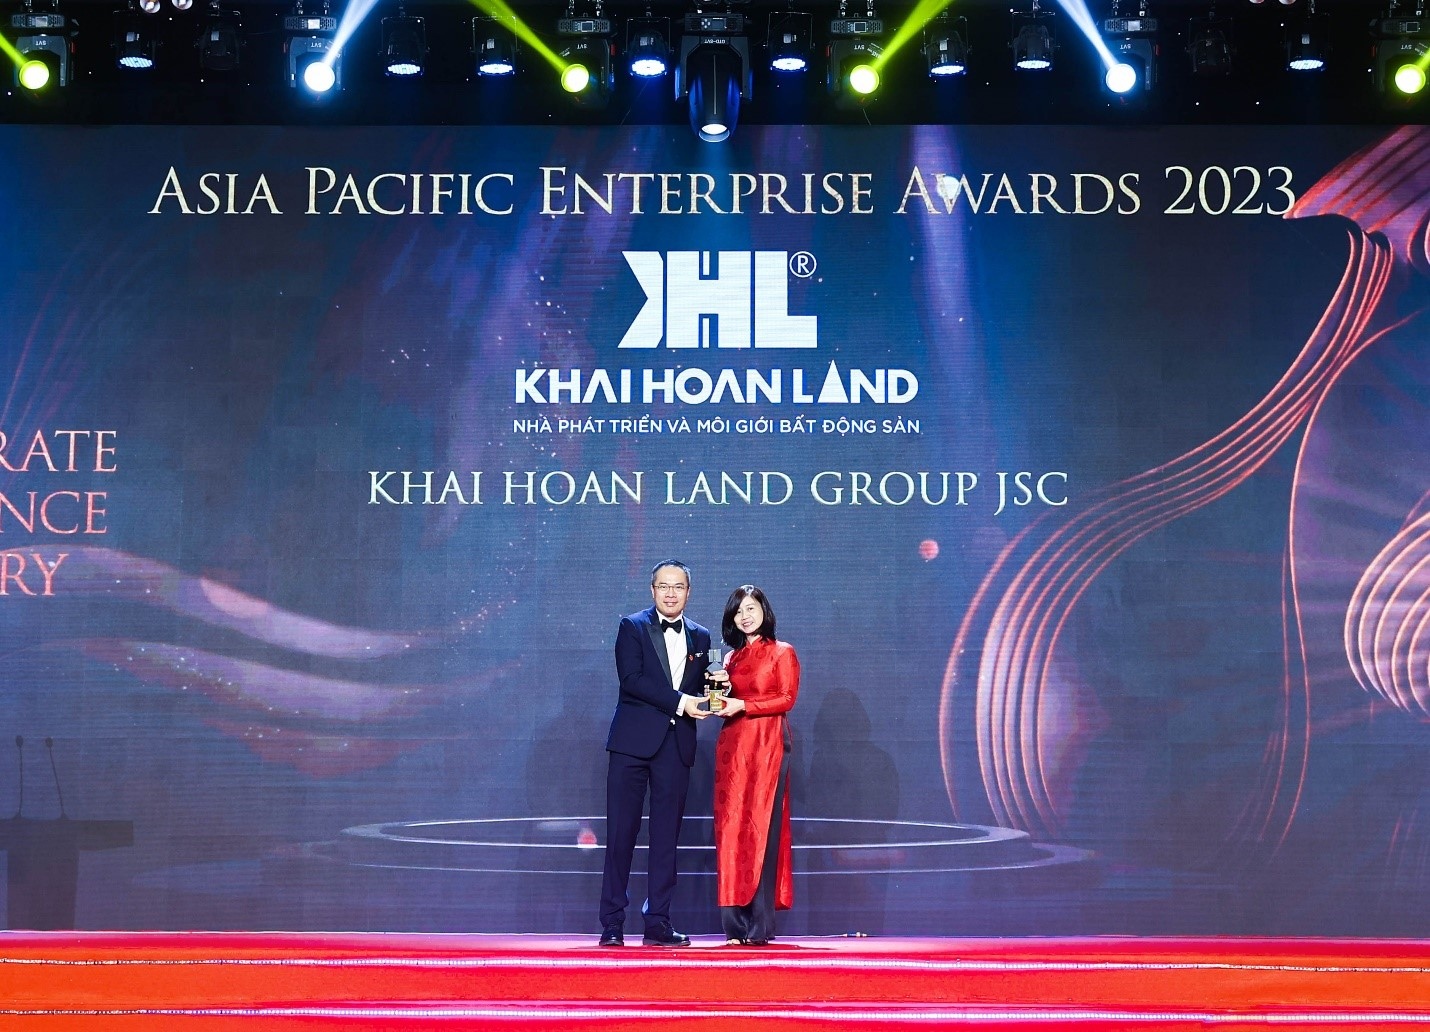 khai hoan land doanh nghiep xuat sac chau a asia pacific enterprise awards 1